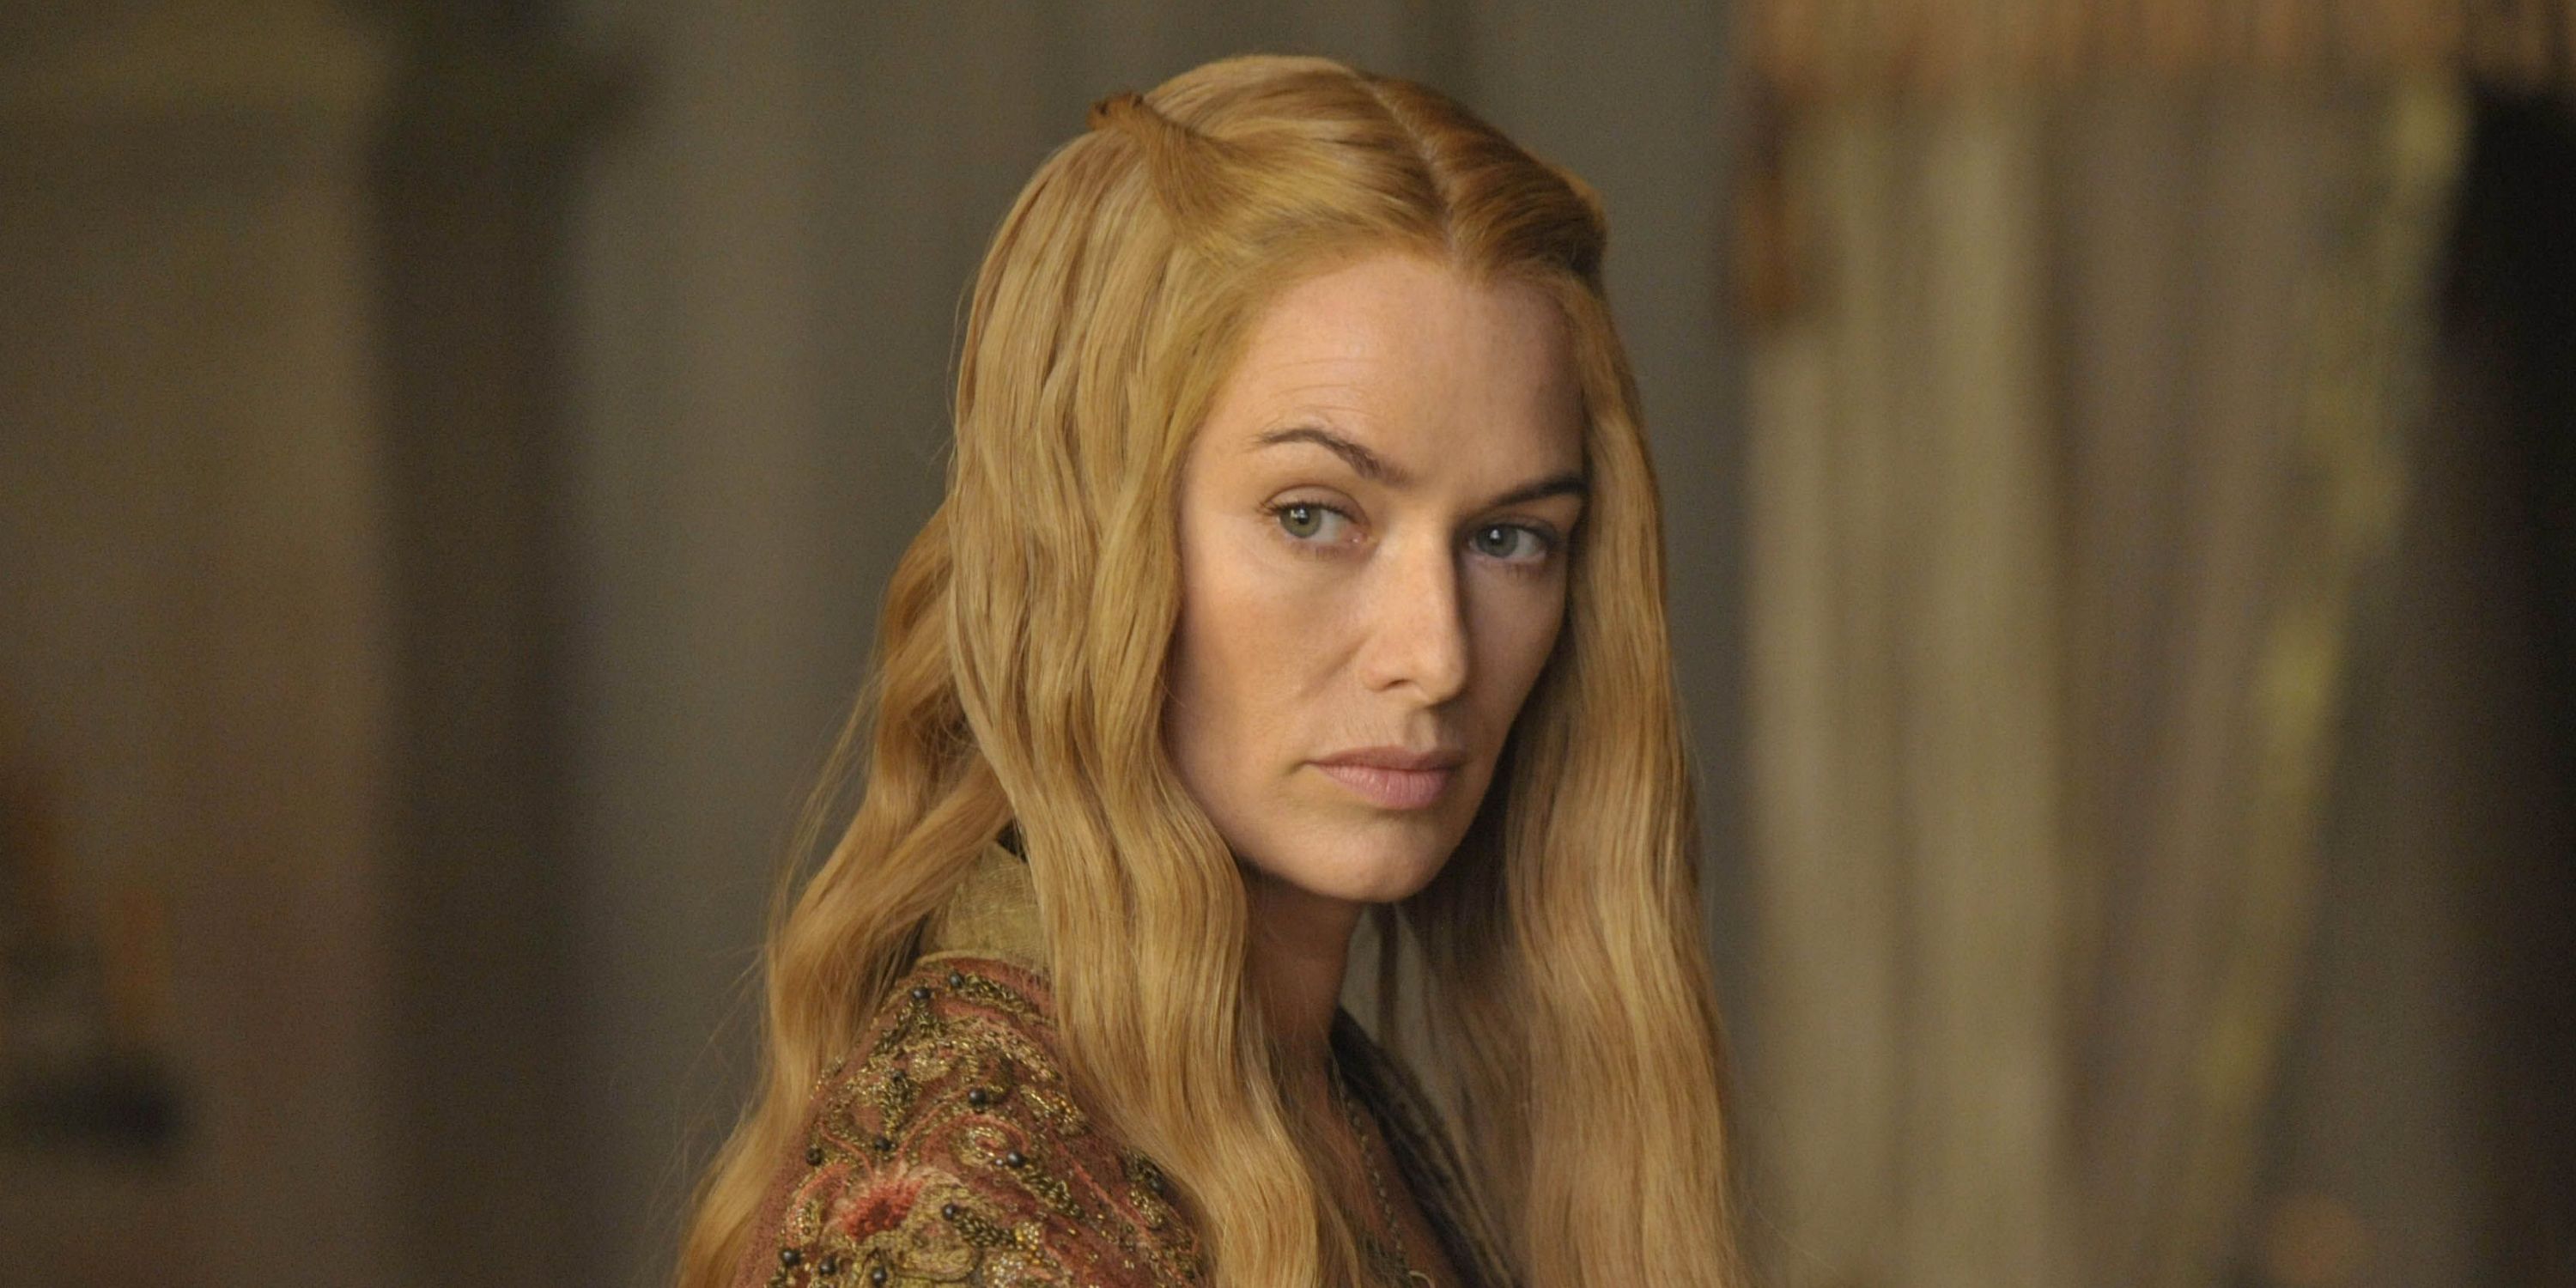 Lena Headey as Cersei Lannister looking haughty in Game of Thrones